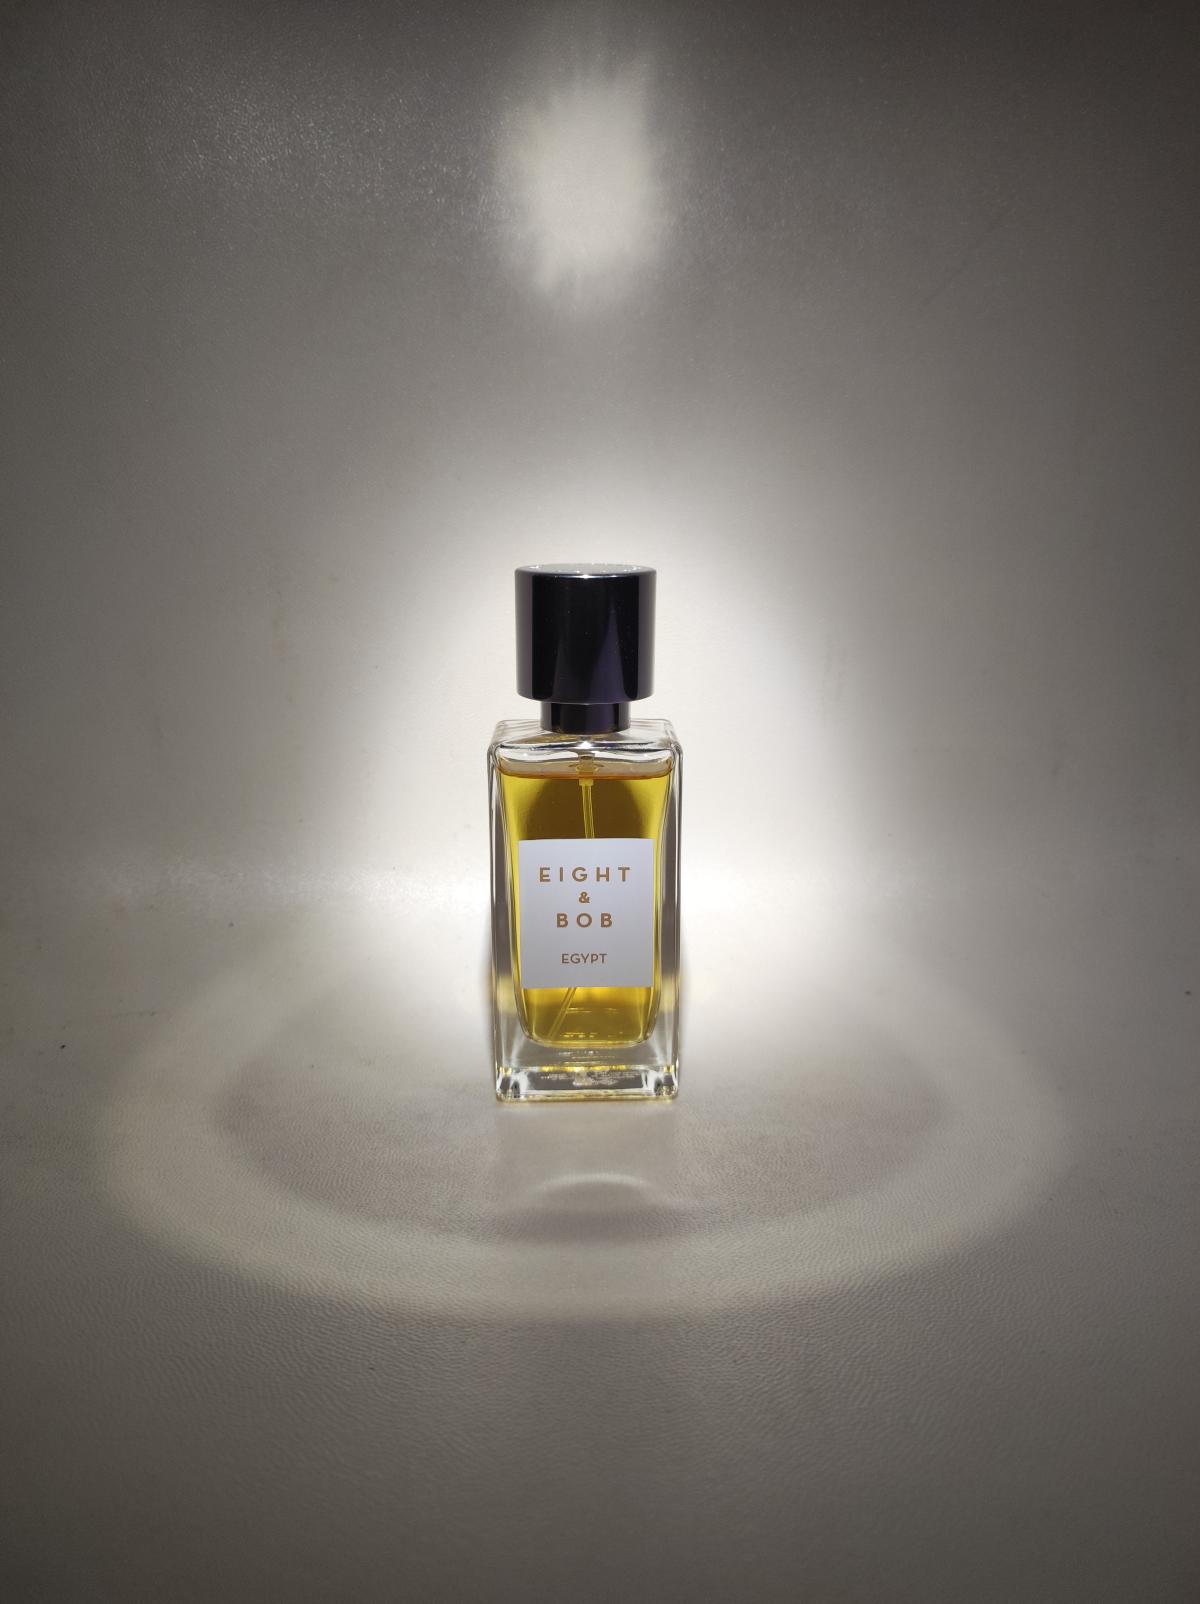 Egypt EIGHT & BOB perfume - a fragrance for women and men 2014